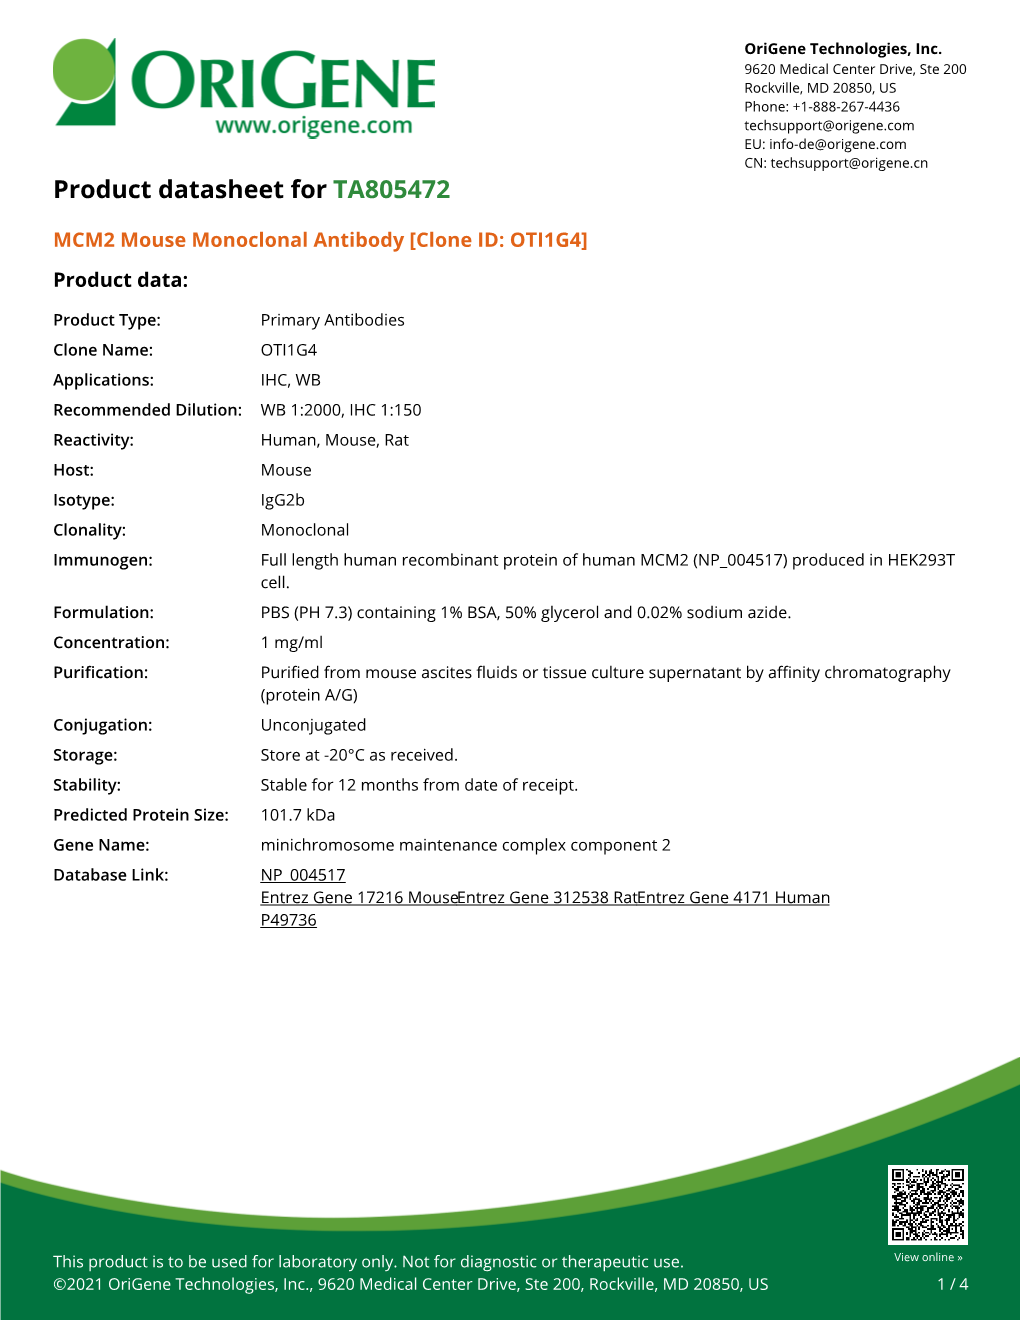 MCM2 Mouse Monoclonal Antibody [Clone ID: OTI1G4] Product Data